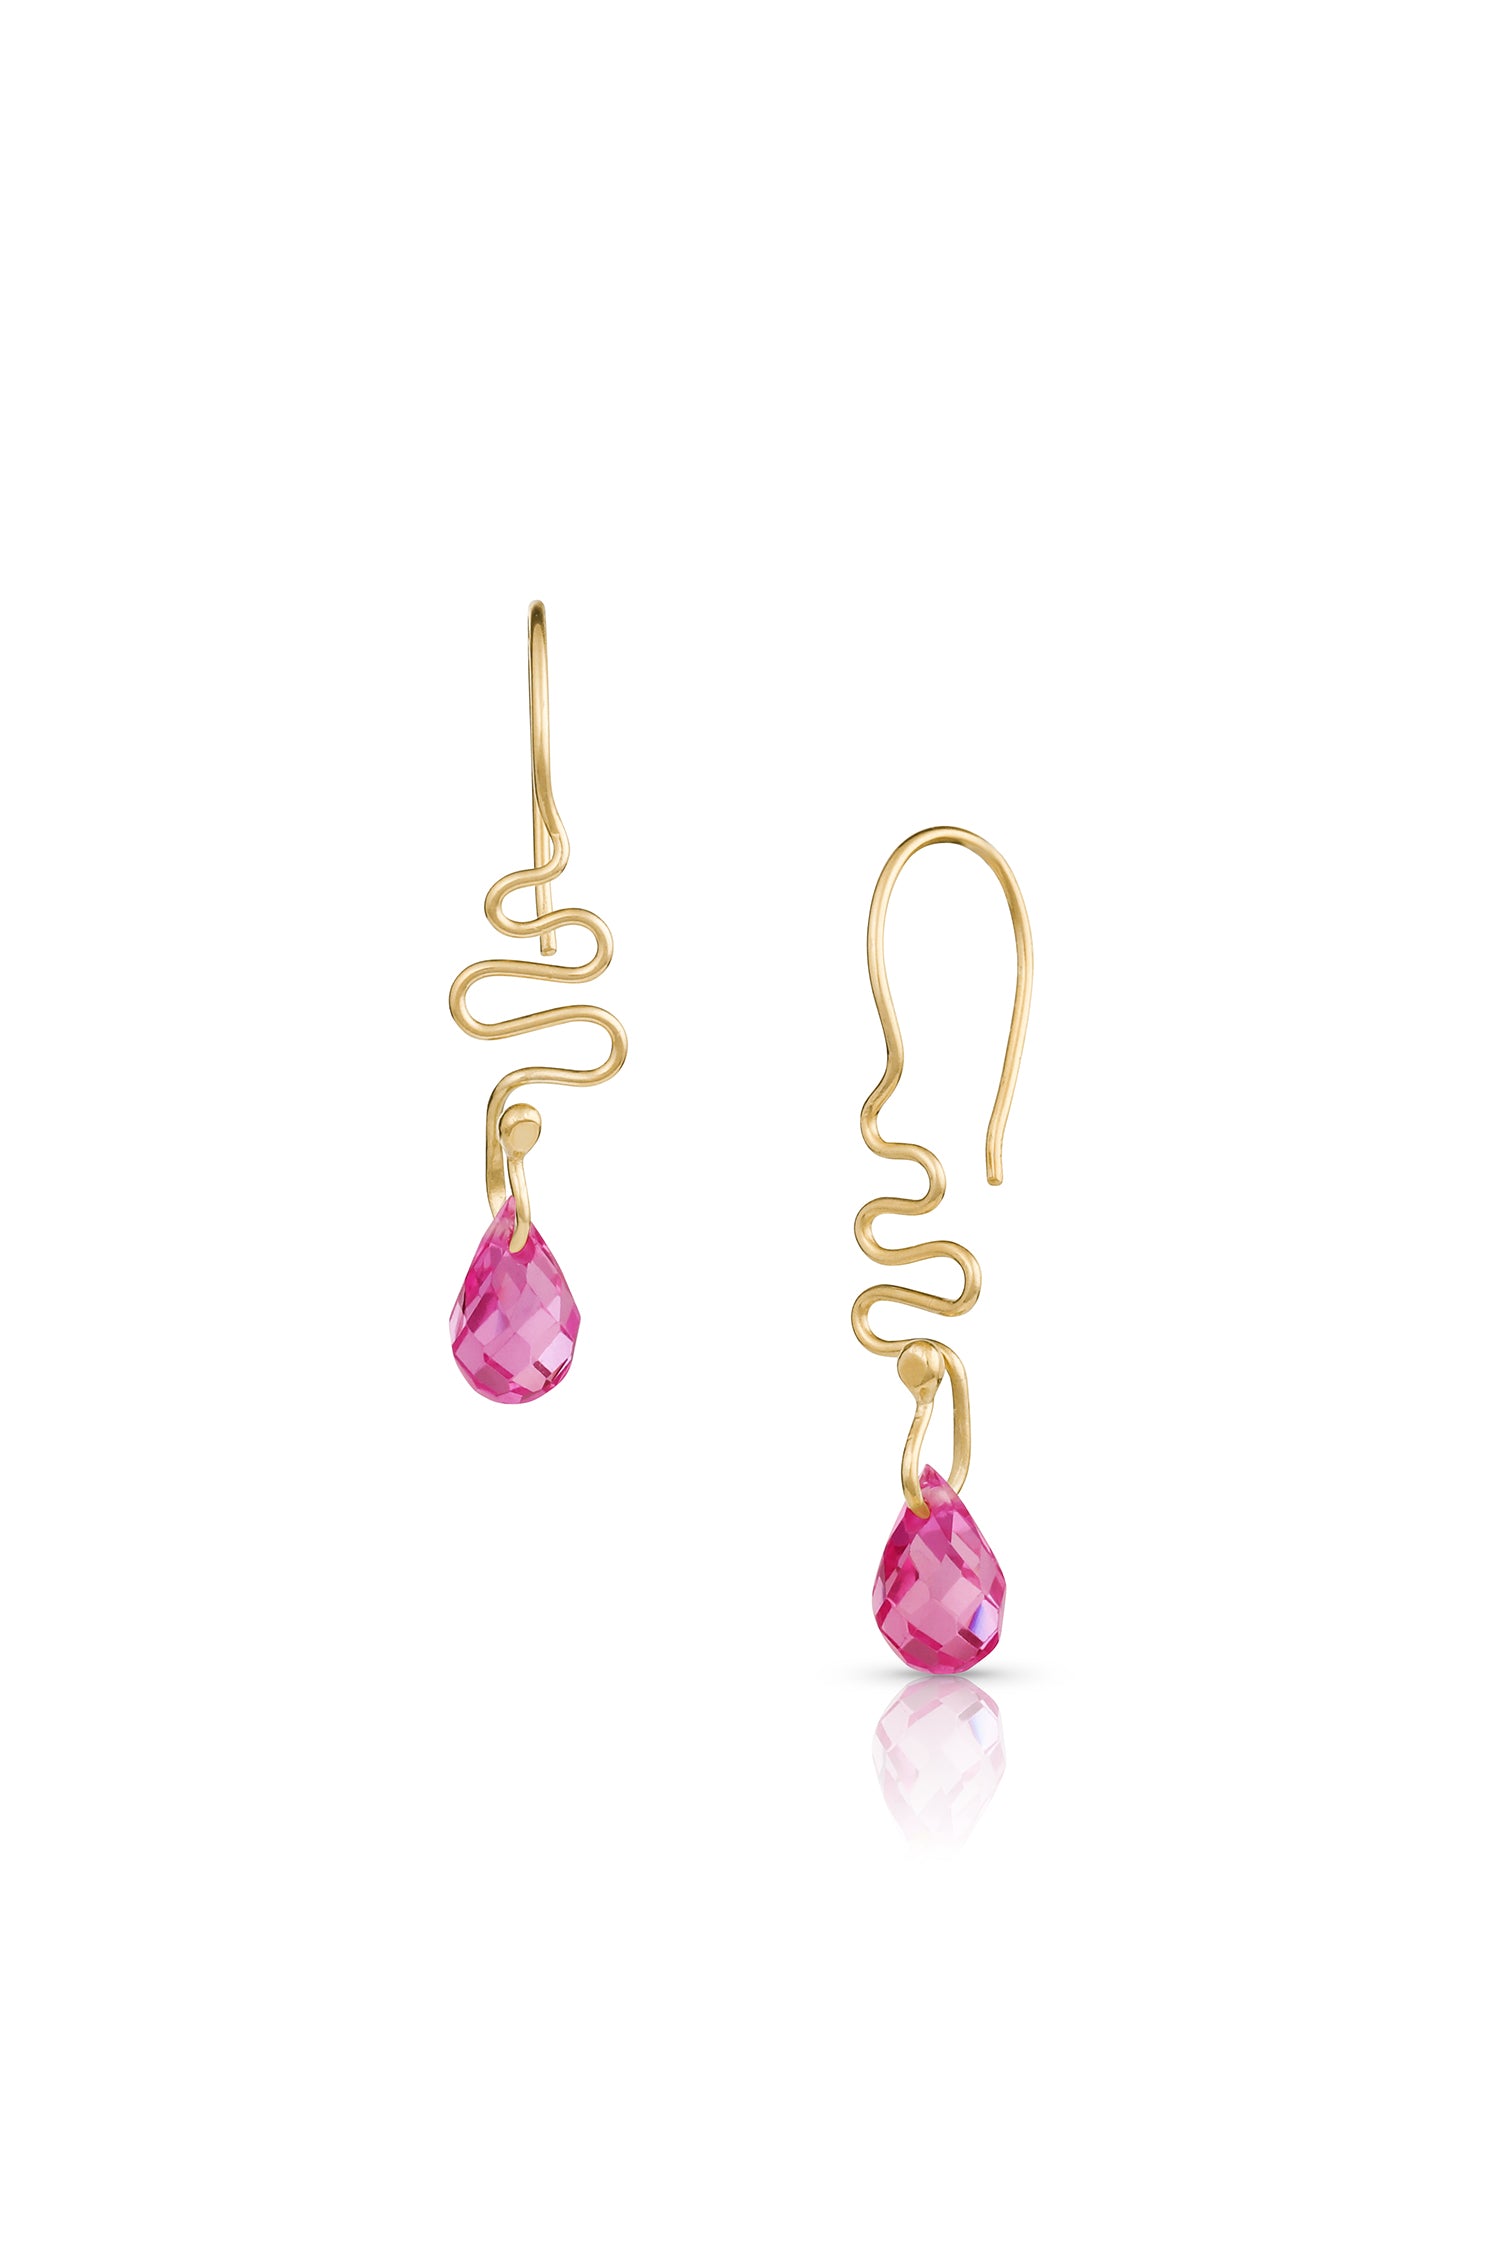 14K Gold Ribbons & Pink Sapphire Earrings